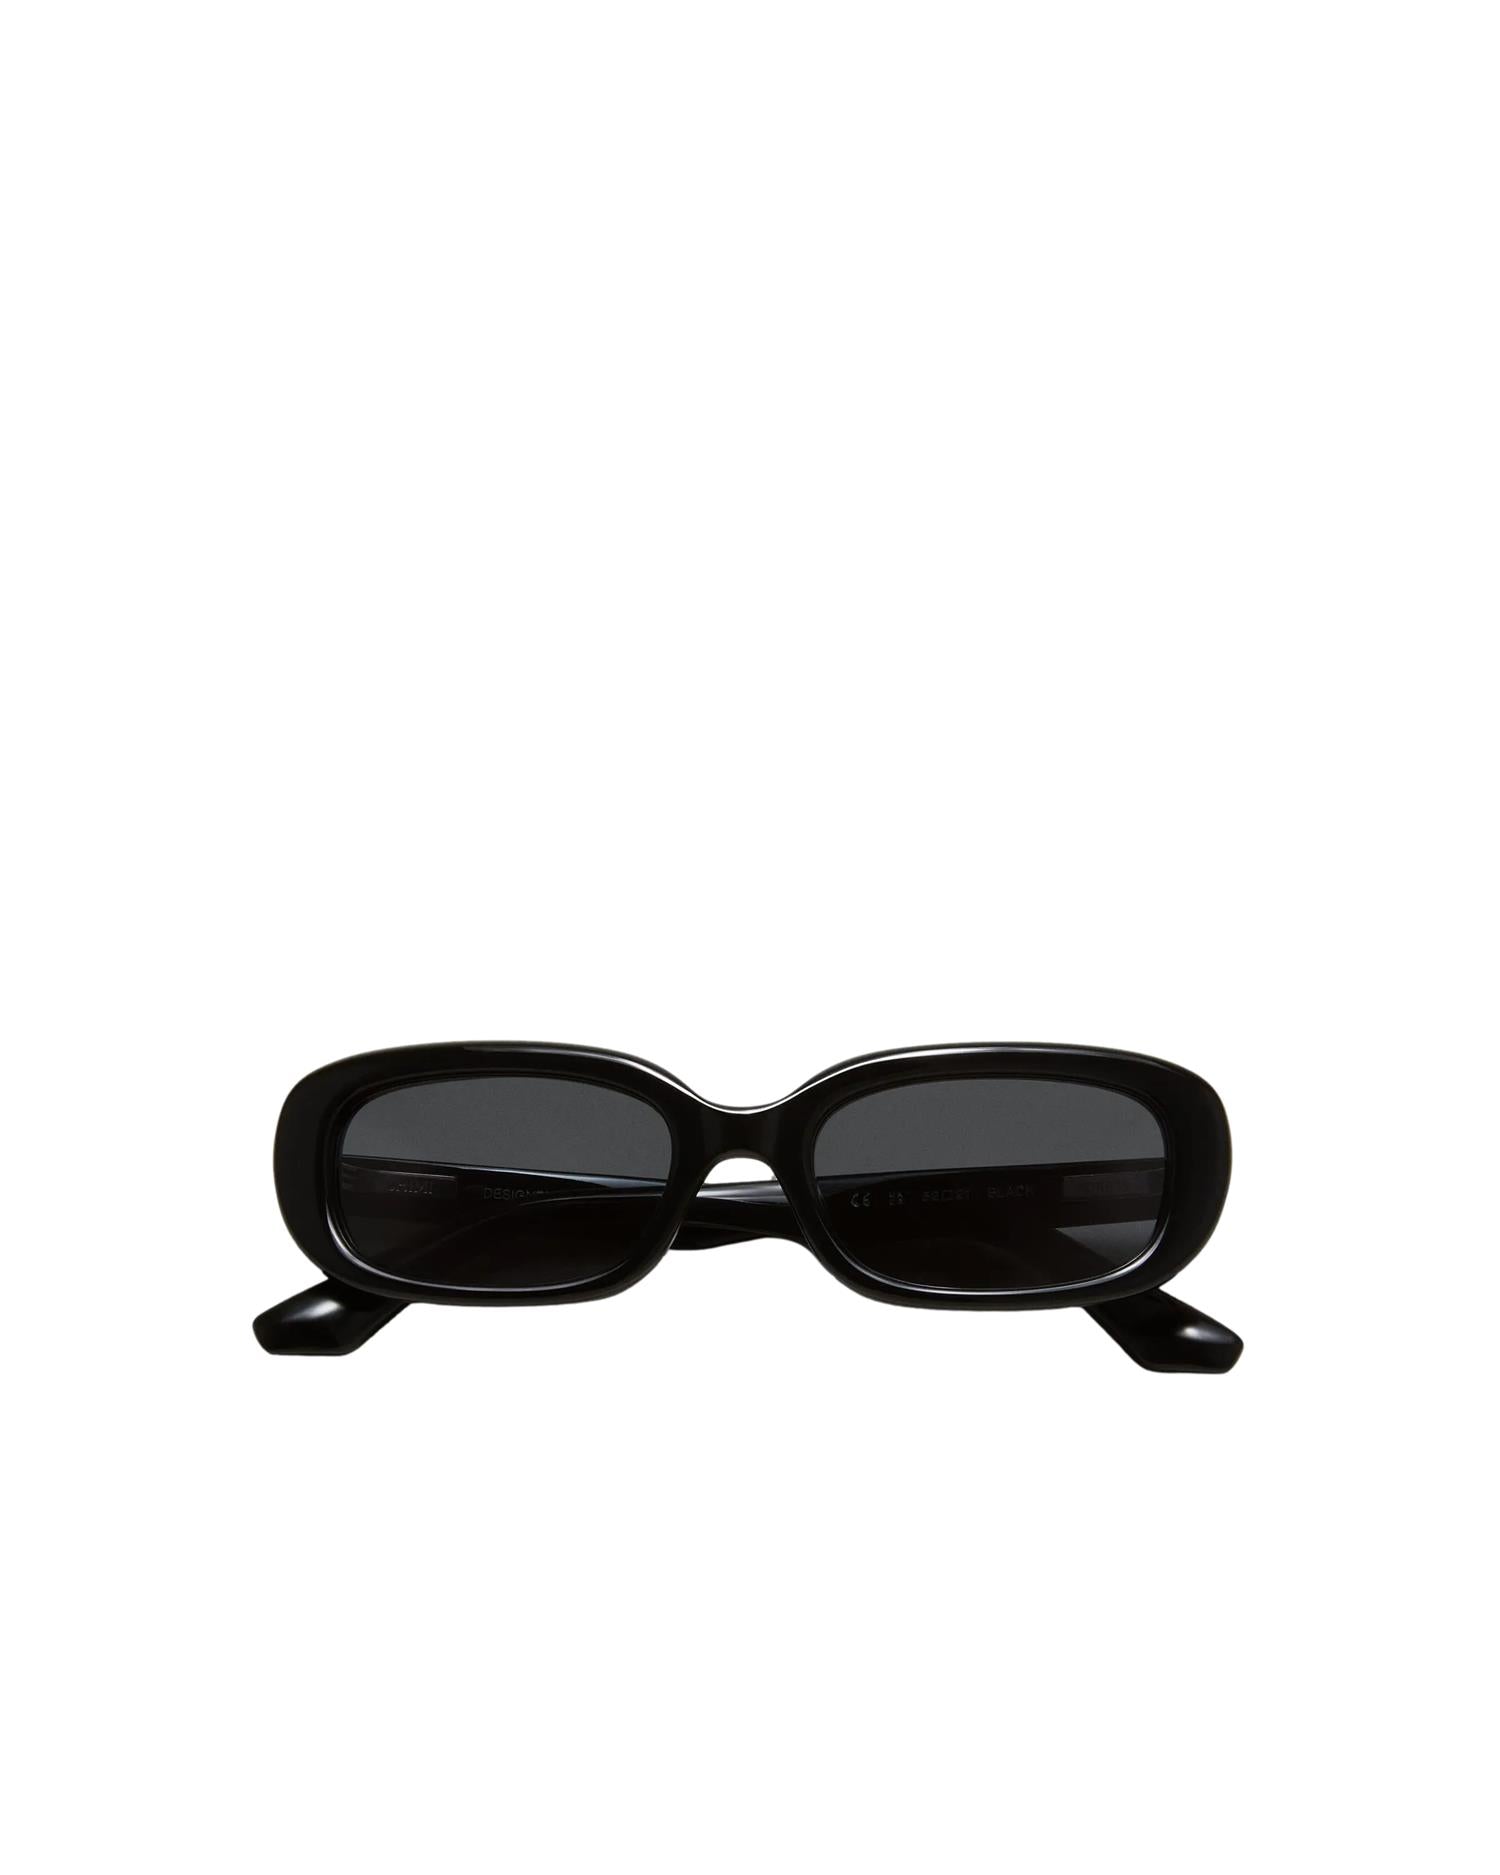 Chimi Eyewear 12 Black Solbriller Sort